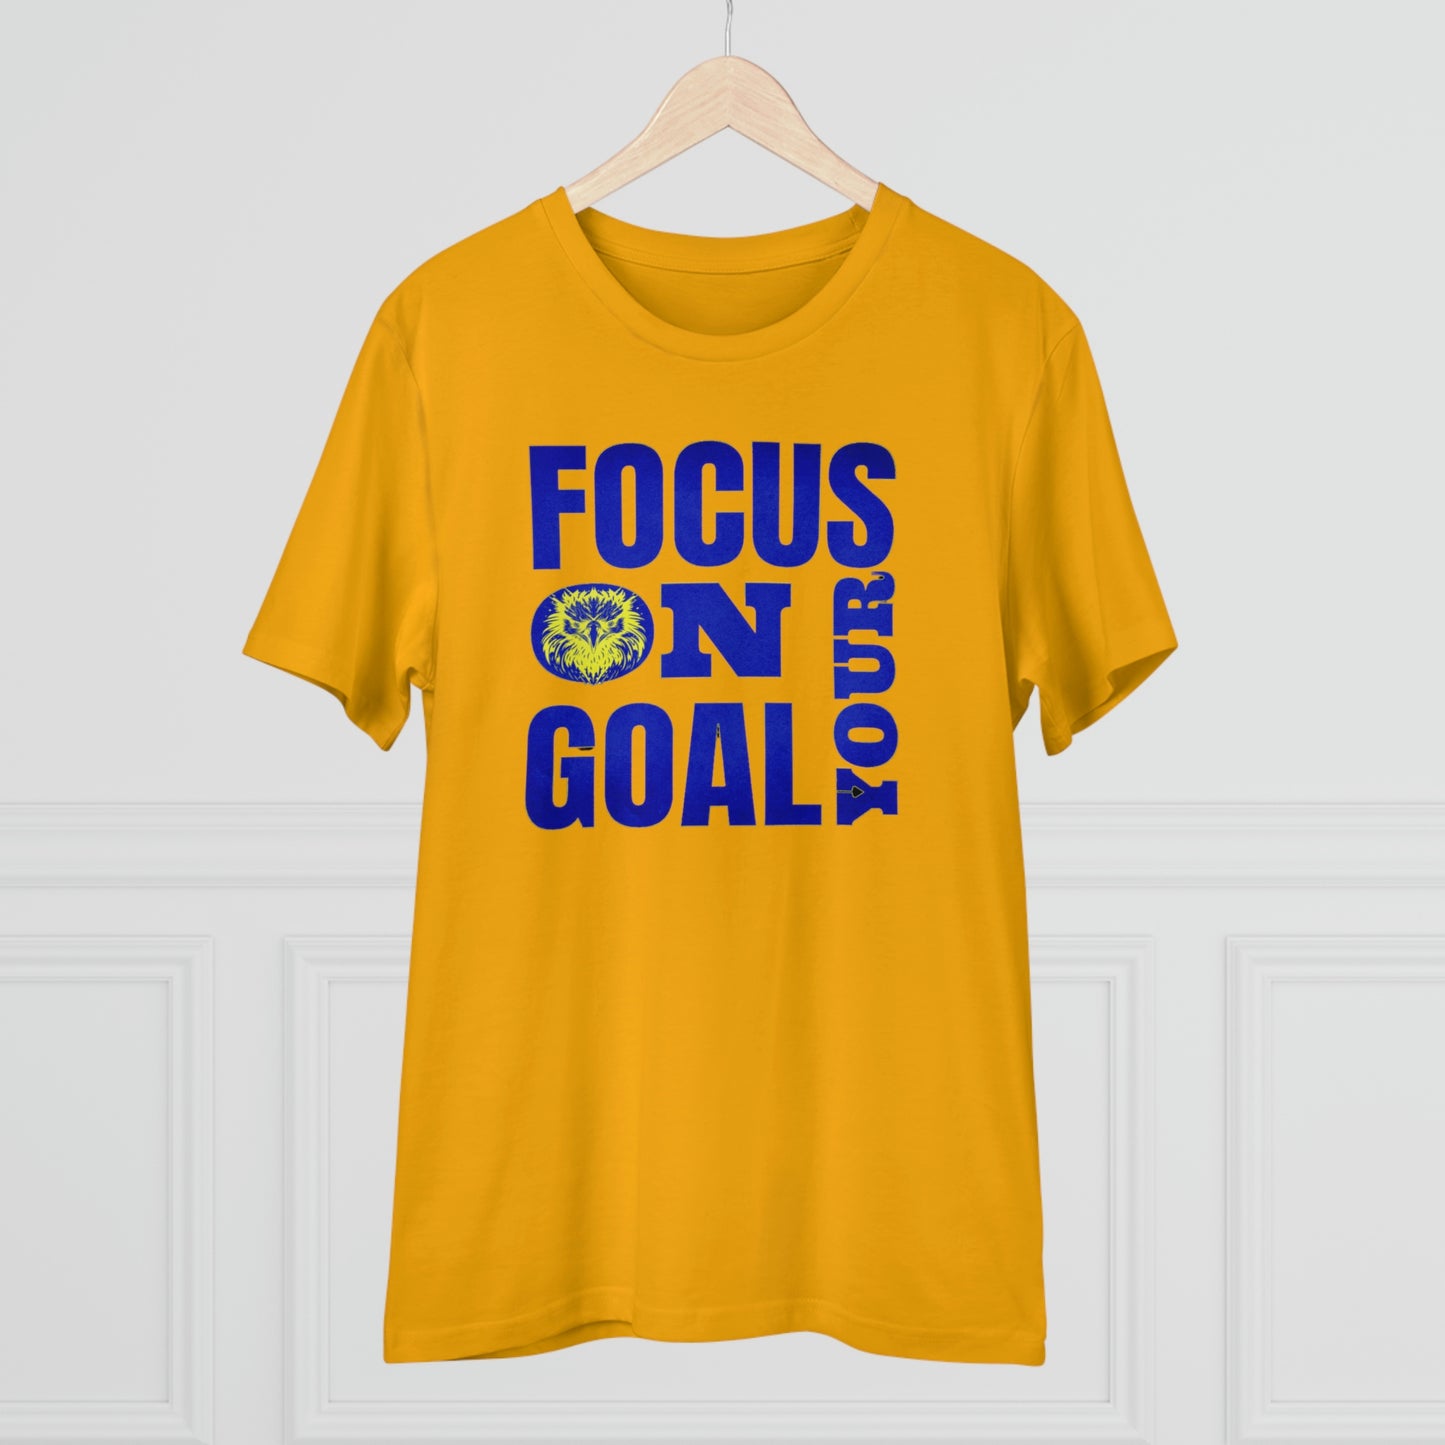 Organic Creator T-shirt - Unisex-Focus on your goal-Eagle